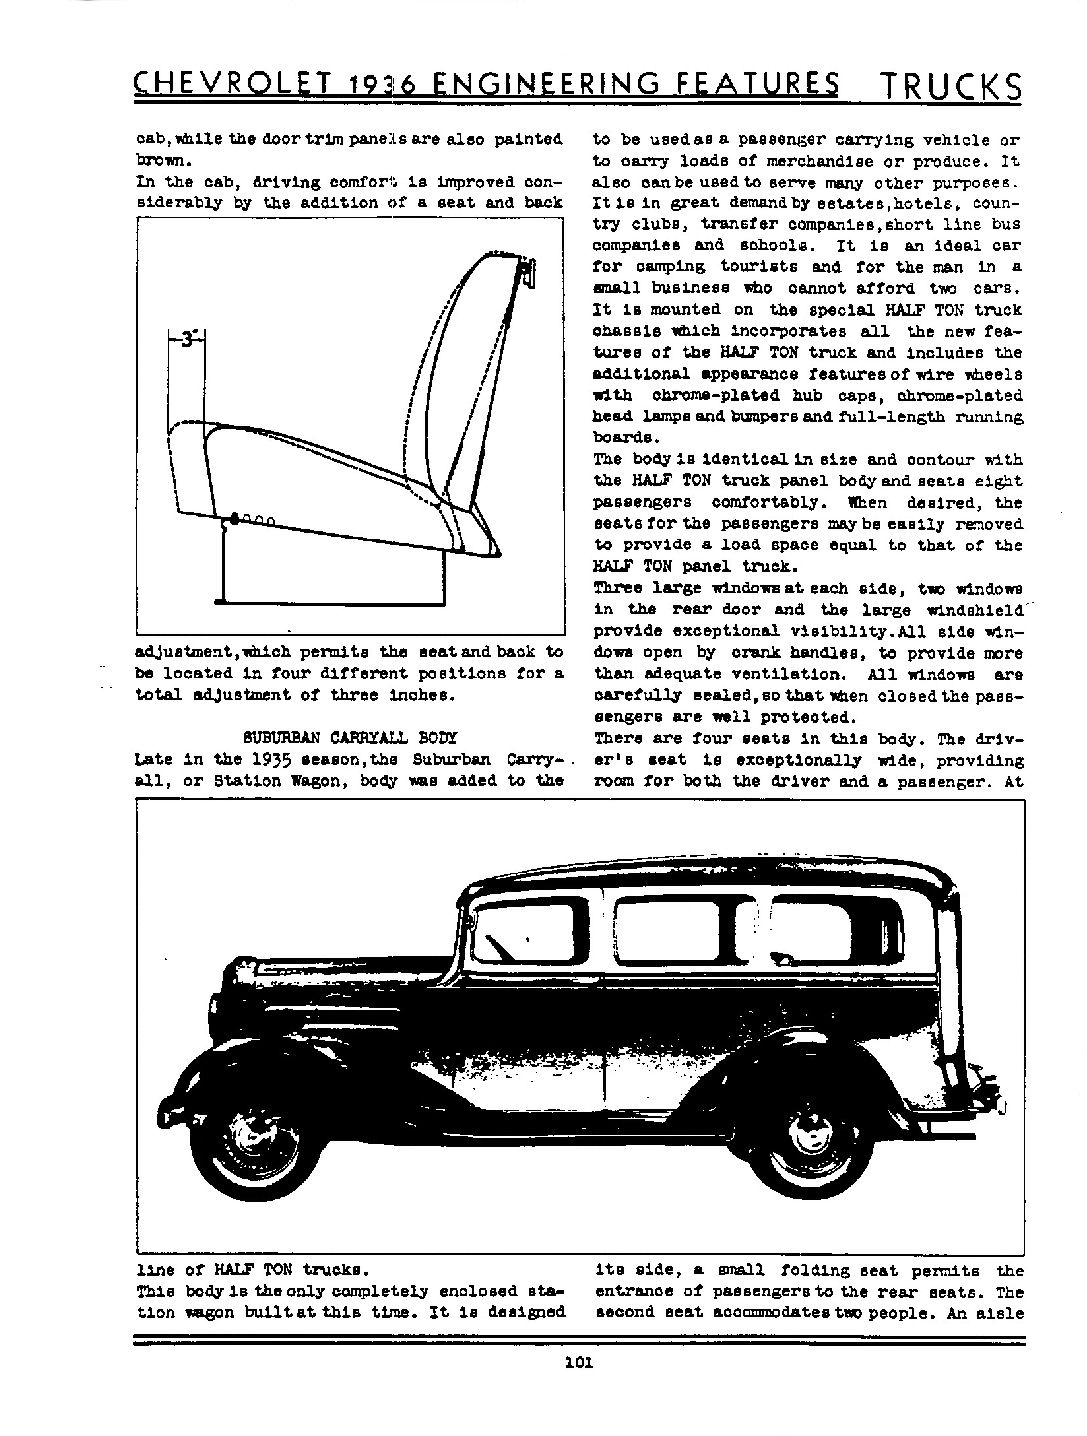 1936_Chevrolet_Engineering_Features-101